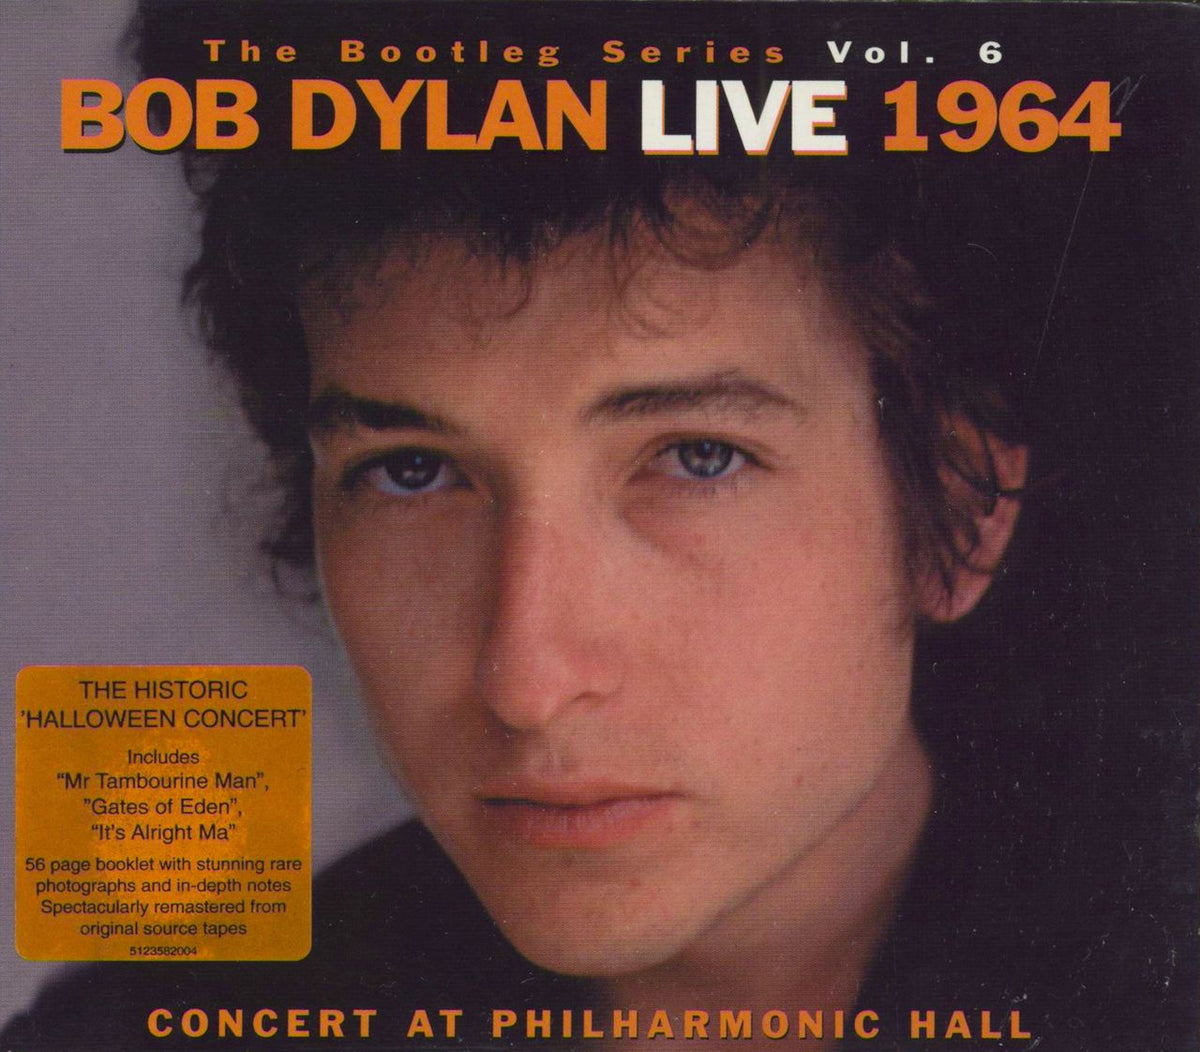 Bob Dylan Live 1964: Concert at Philharmonic Hall UK 2-CD album set —  RareVinyl.com